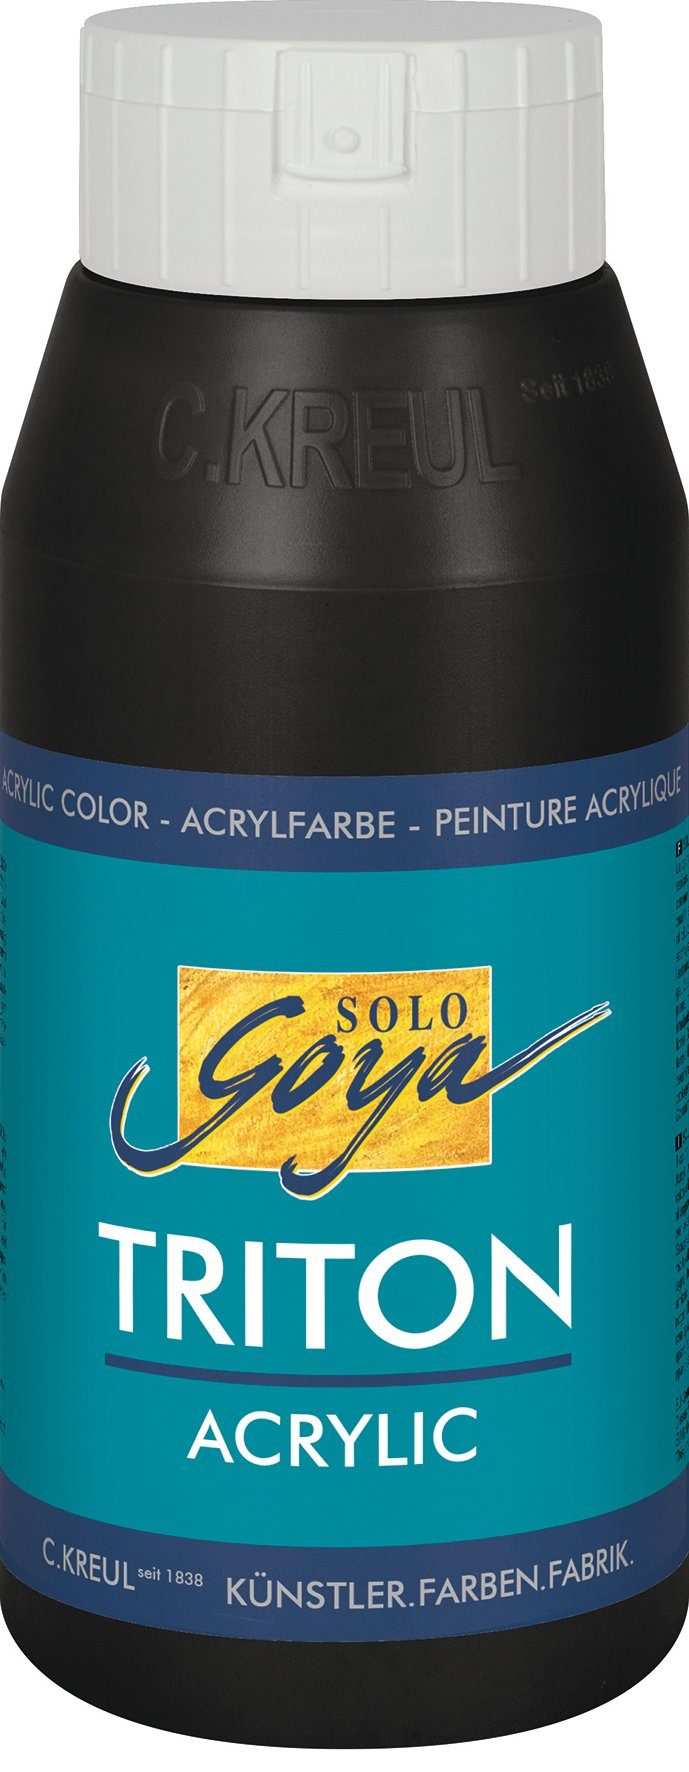 Kreul Acrylfarbe Solo Goya Triton Acrylic, 750 ml Schwarz